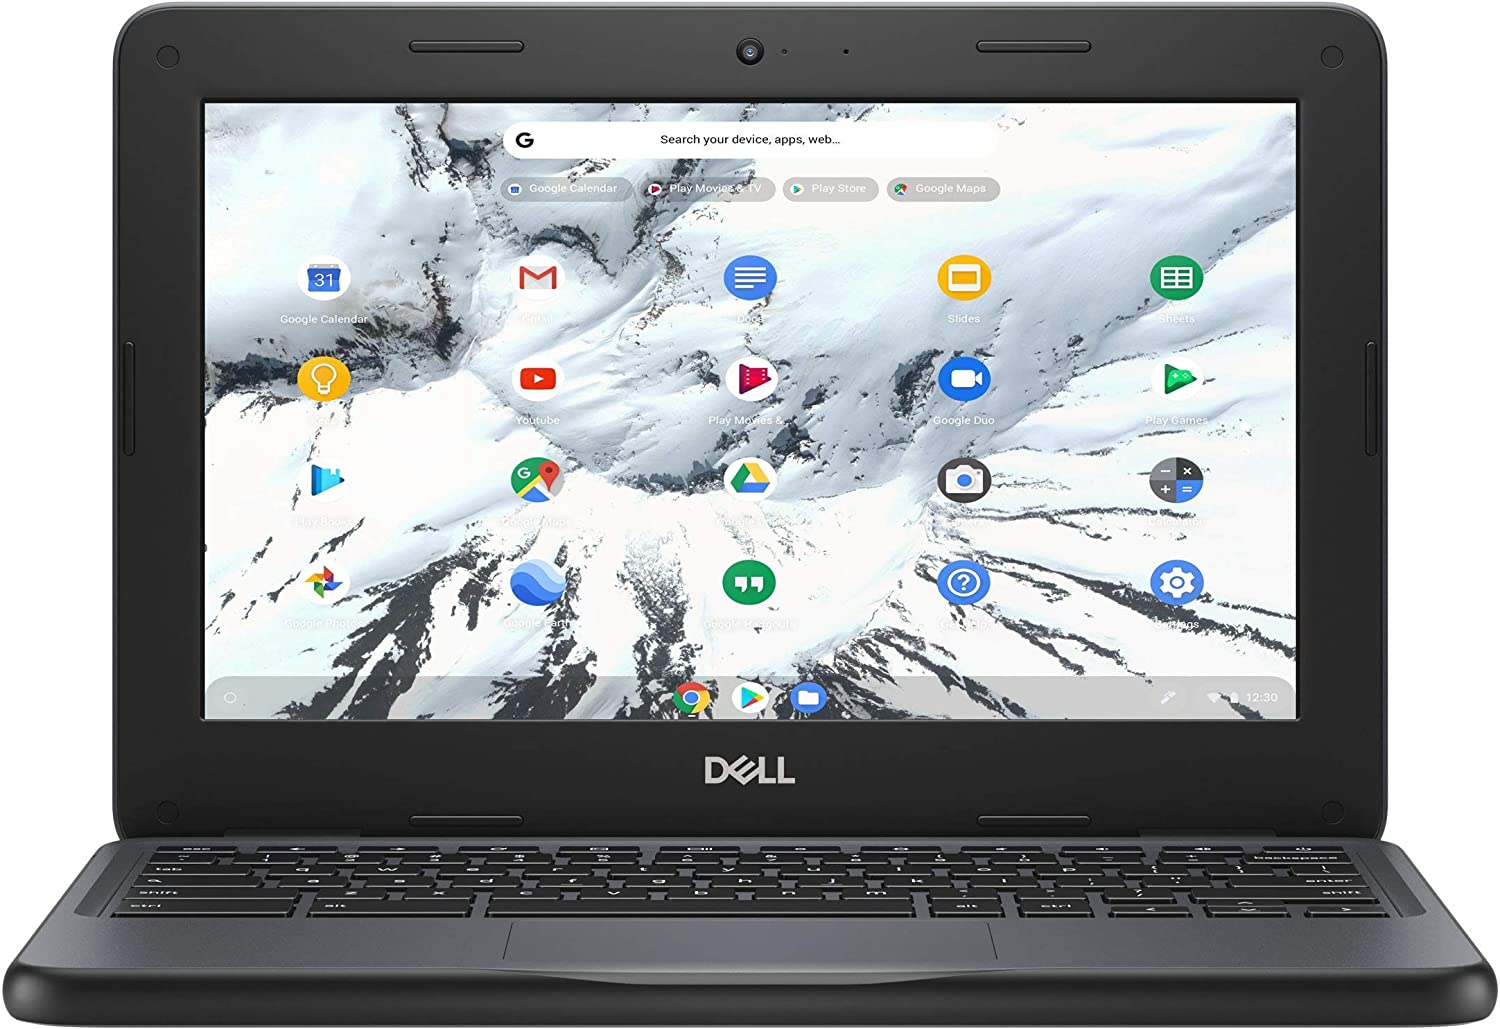 5. Dell Chromebook 11 Best Touchscreen Chromebook Under $300: